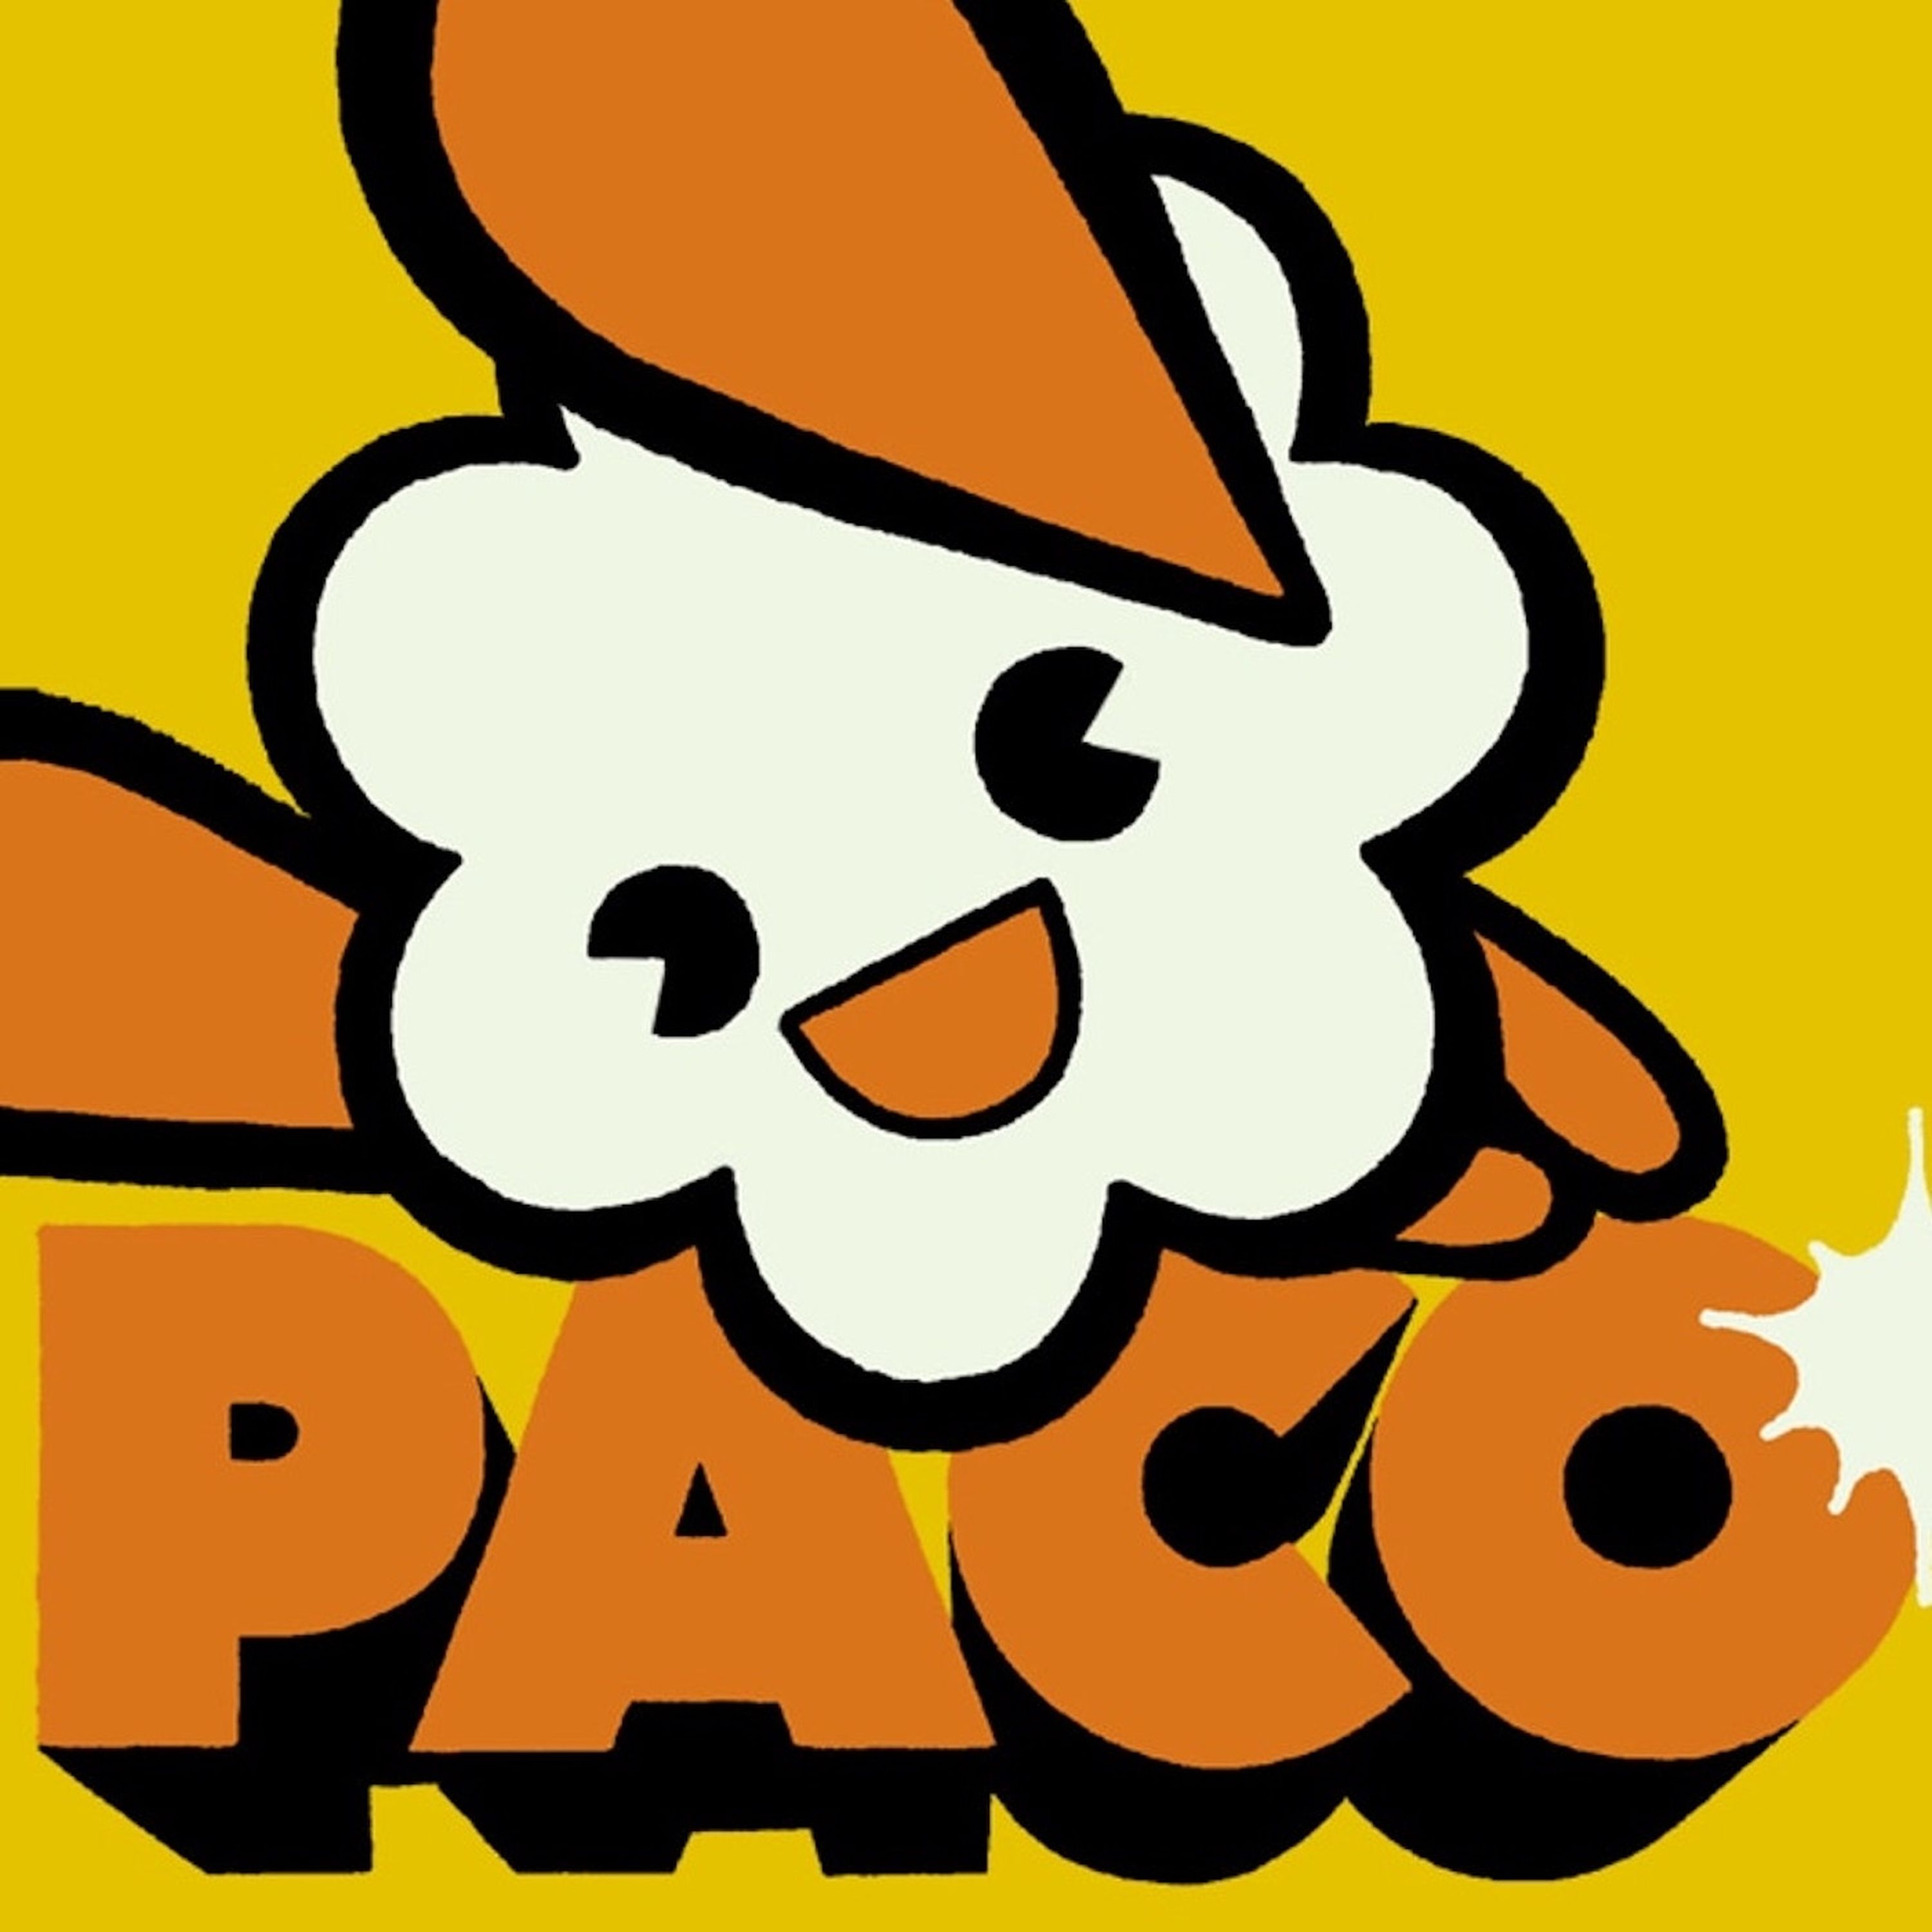 305. Pike och Paco the Judo Popcorn